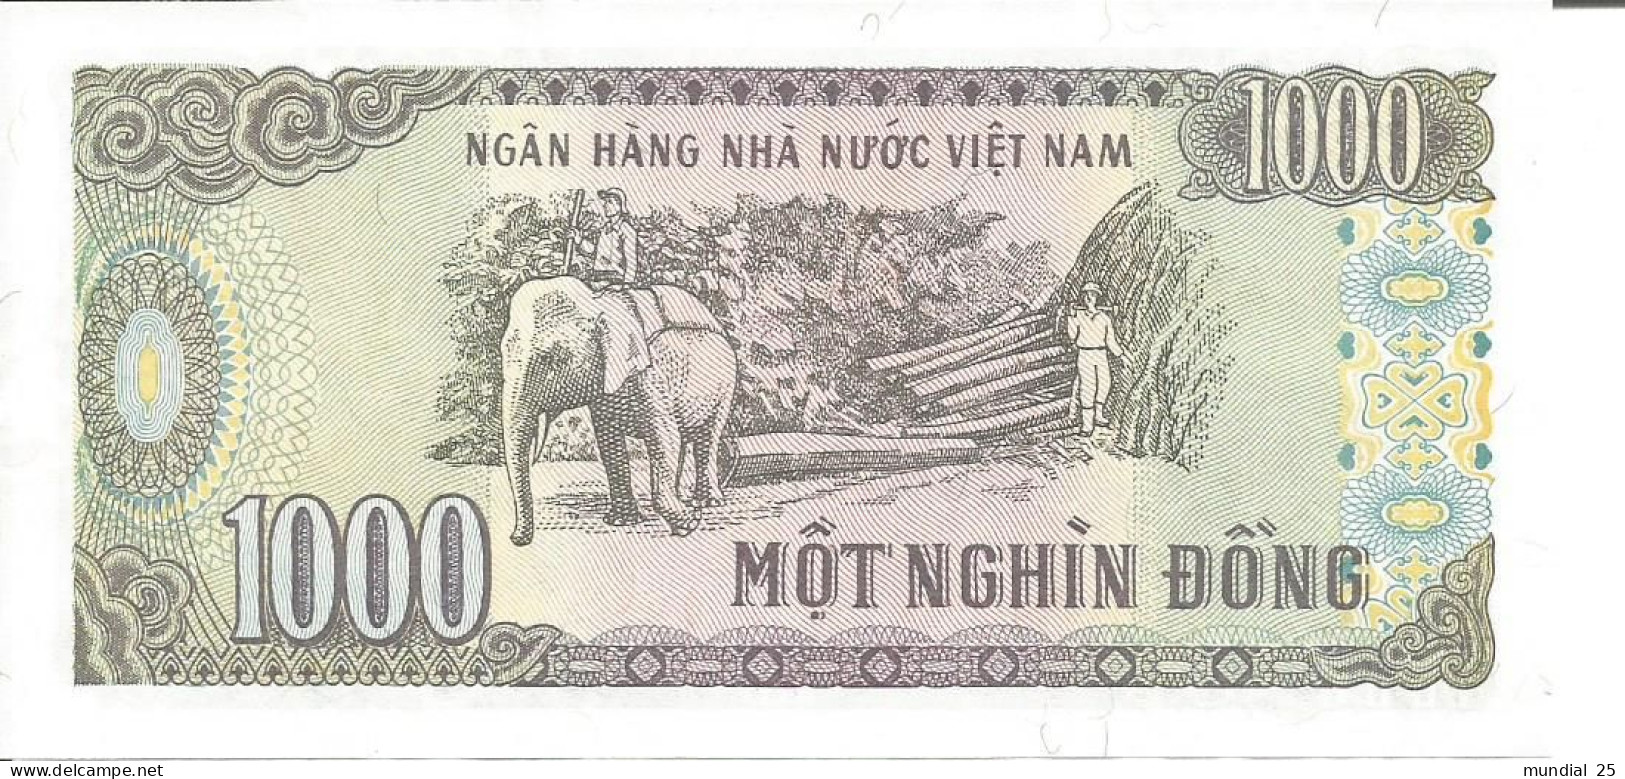 3 VIETNAM NOTES 1.000 DONG 1988 - Vietnam